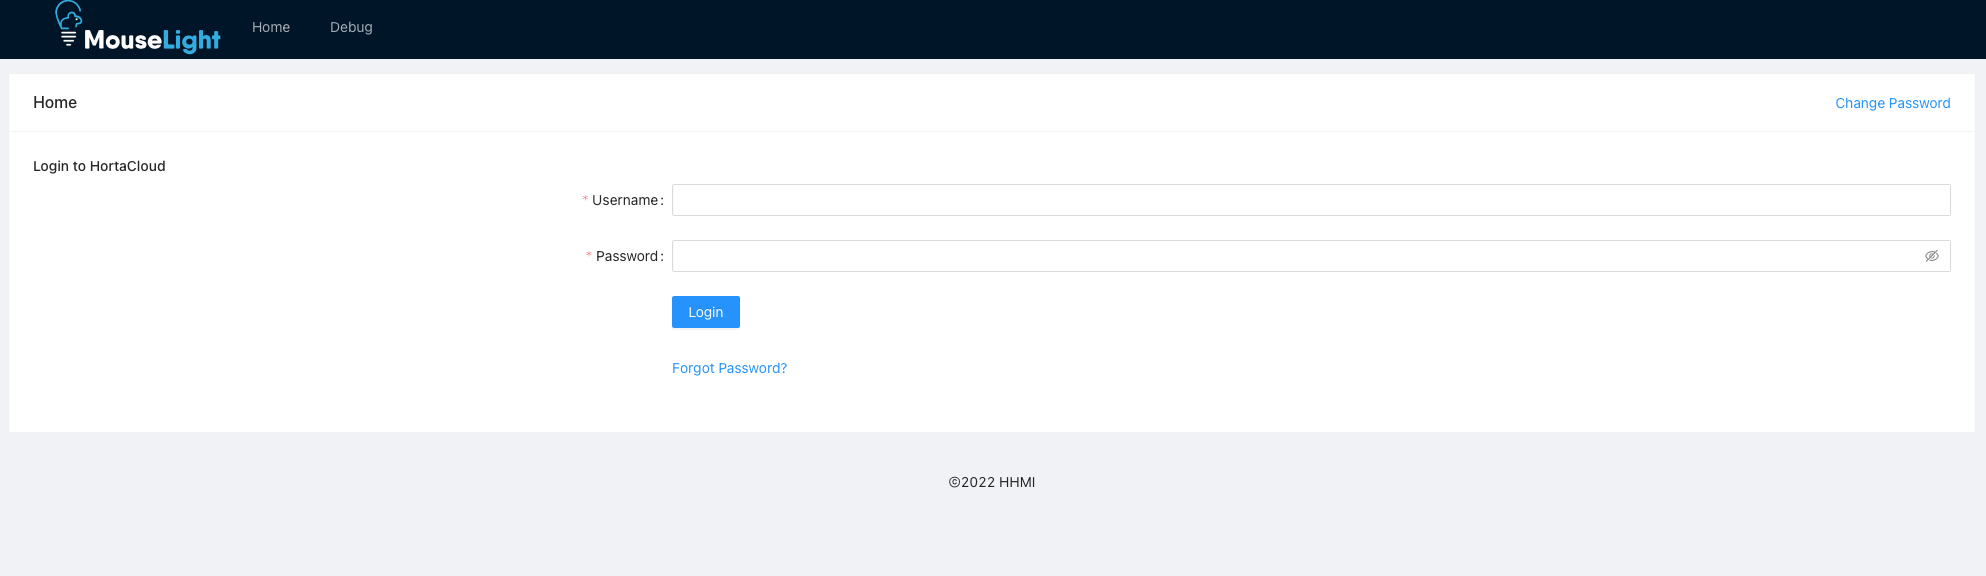 HortaCloud portal username and password screen